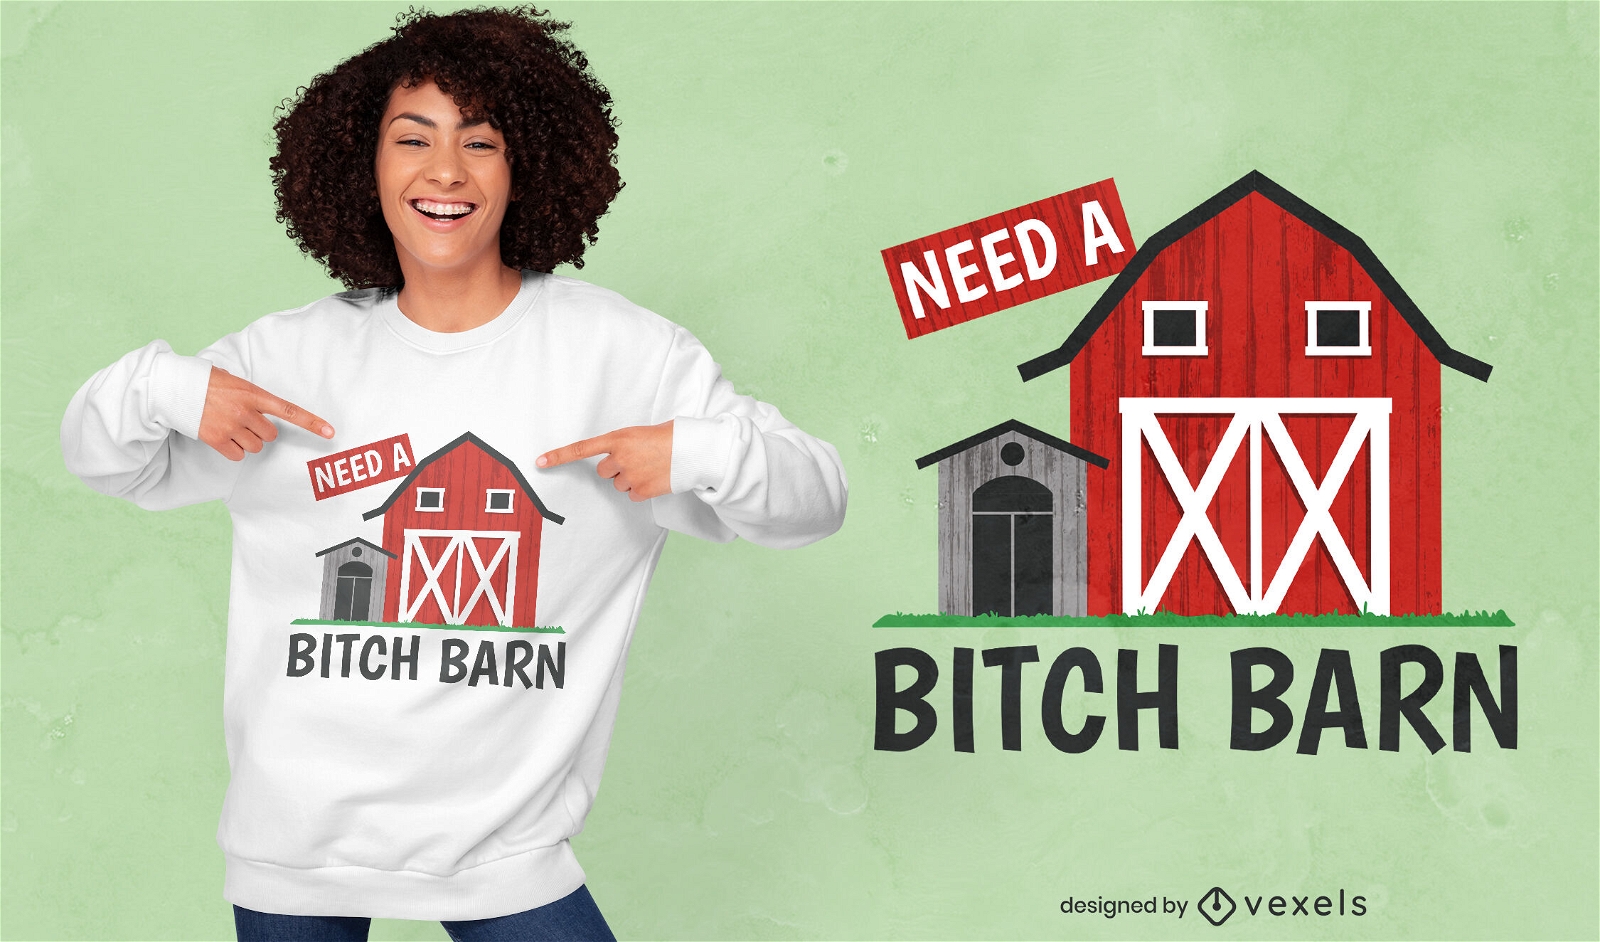 Bitch barn t-shirt design